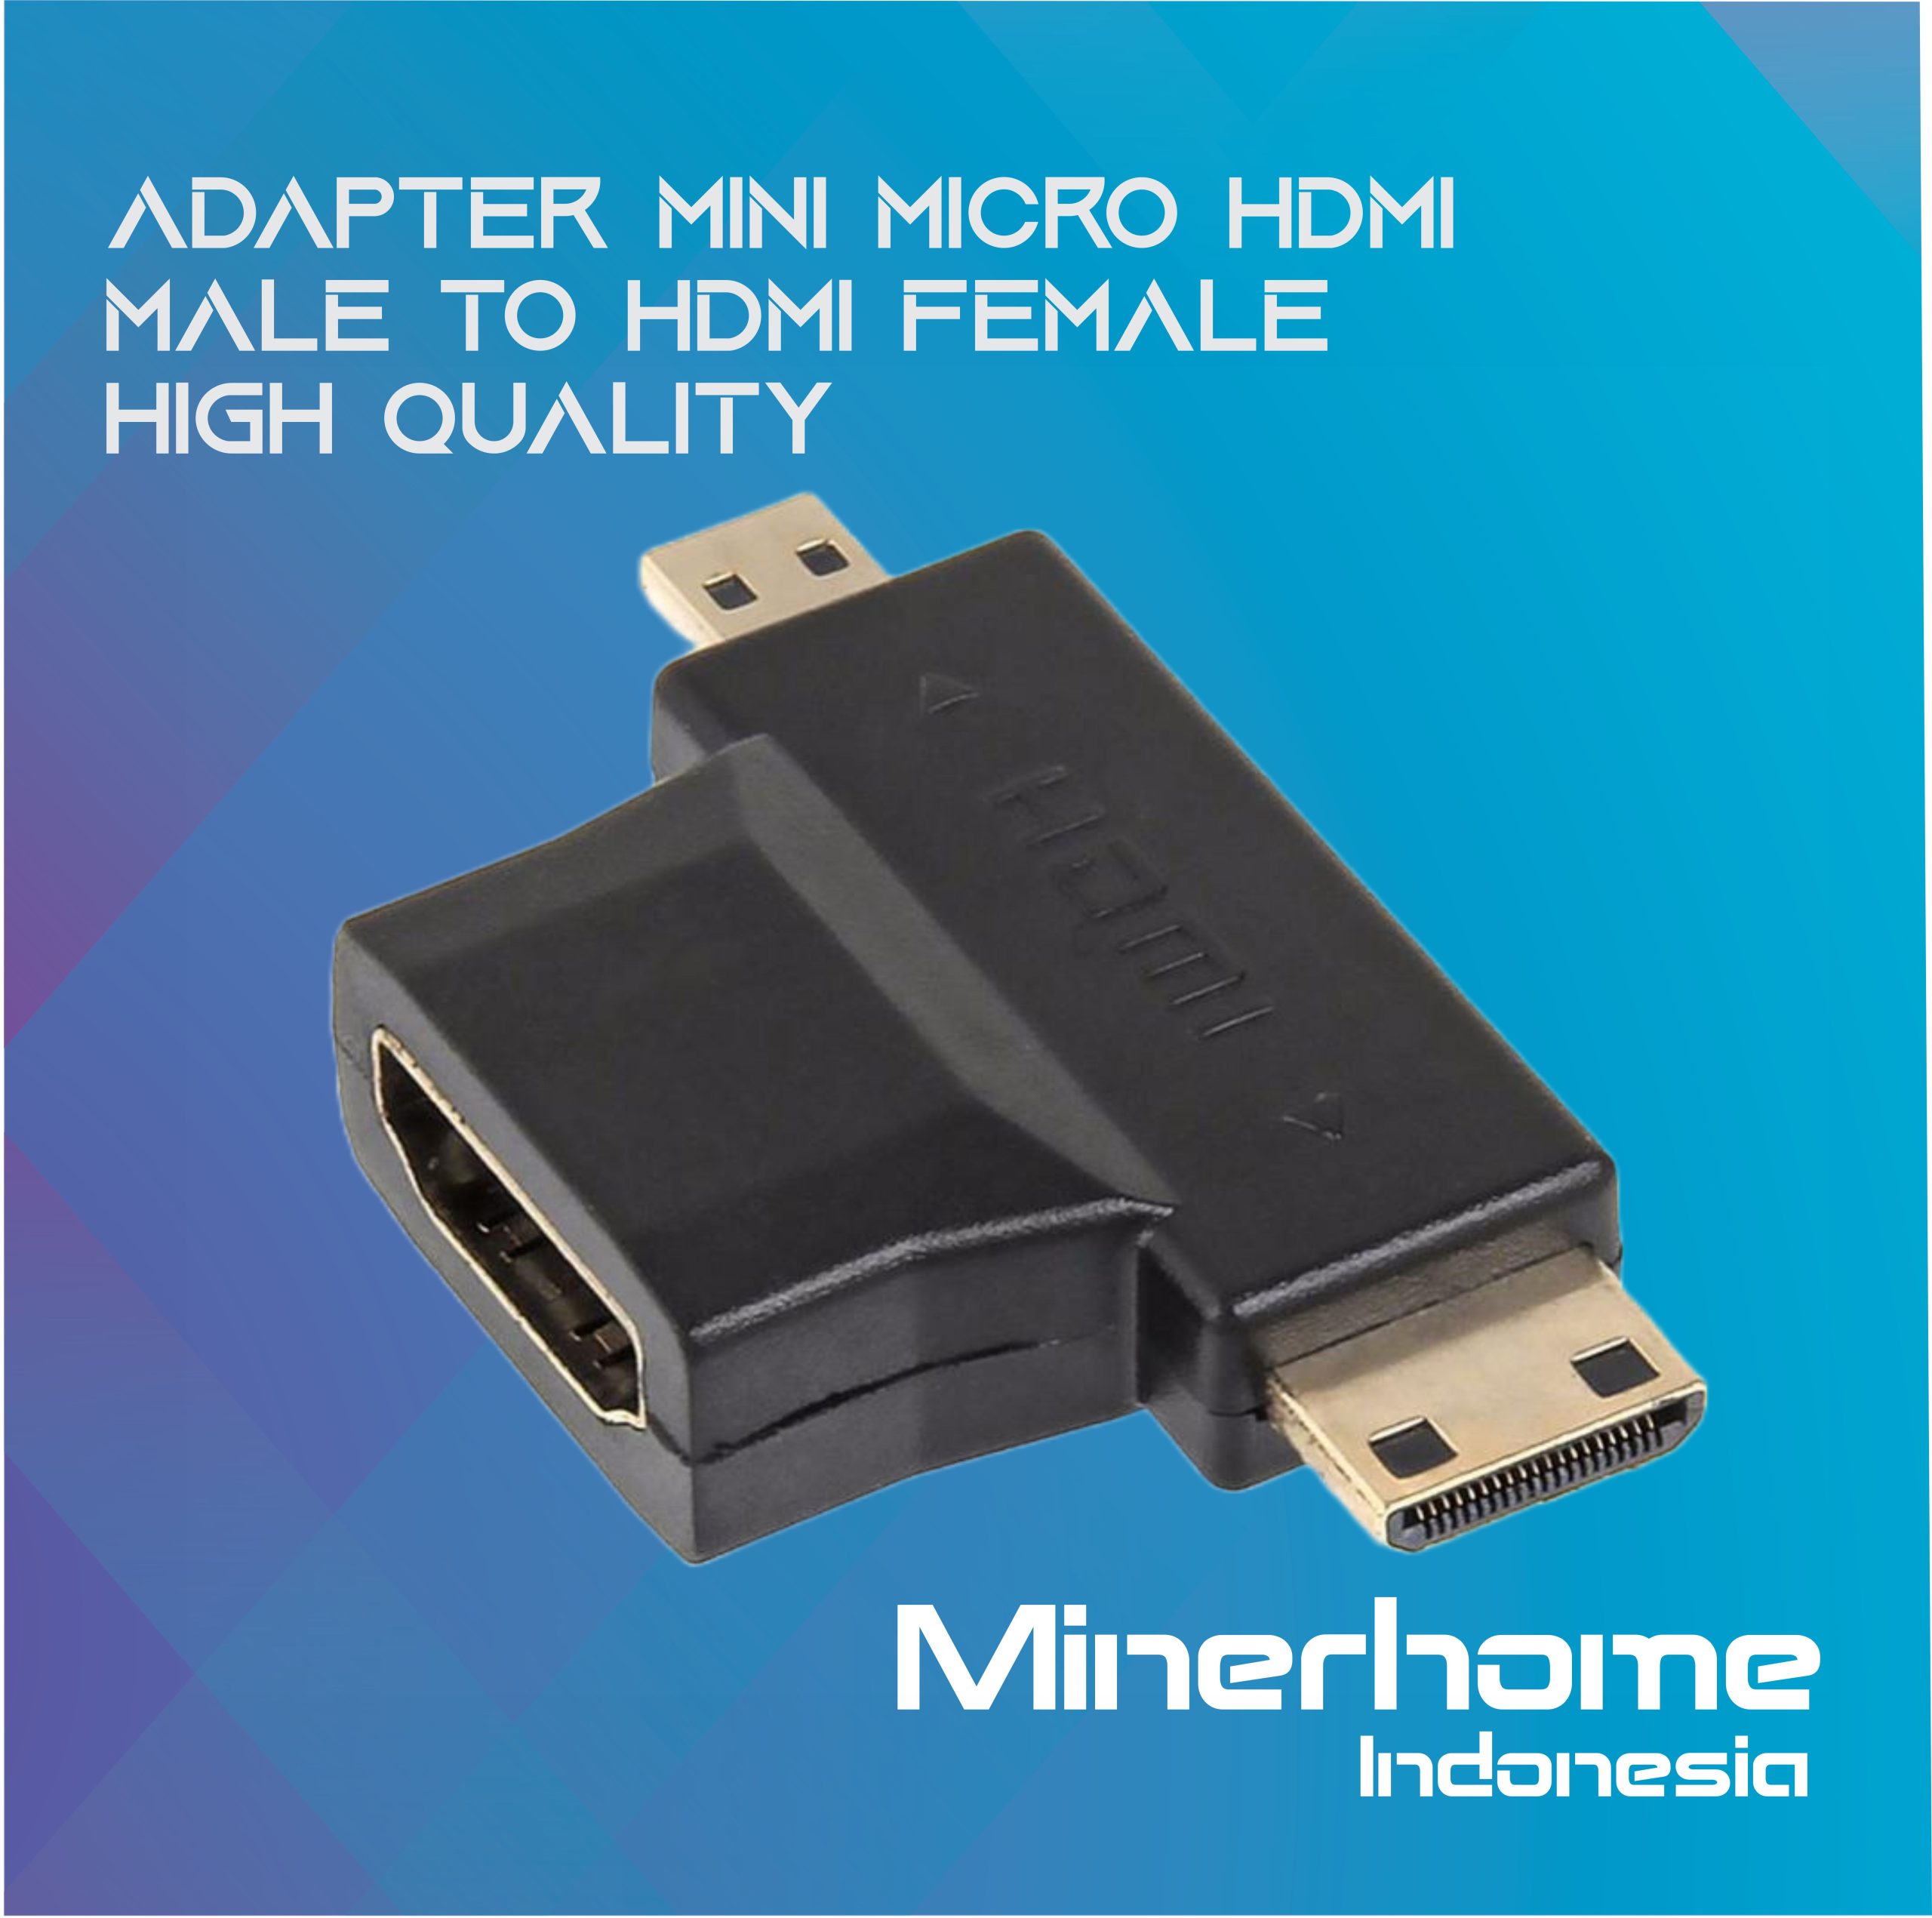 Adapter Mini Micro HDMI Male to HDMI Female High Quality